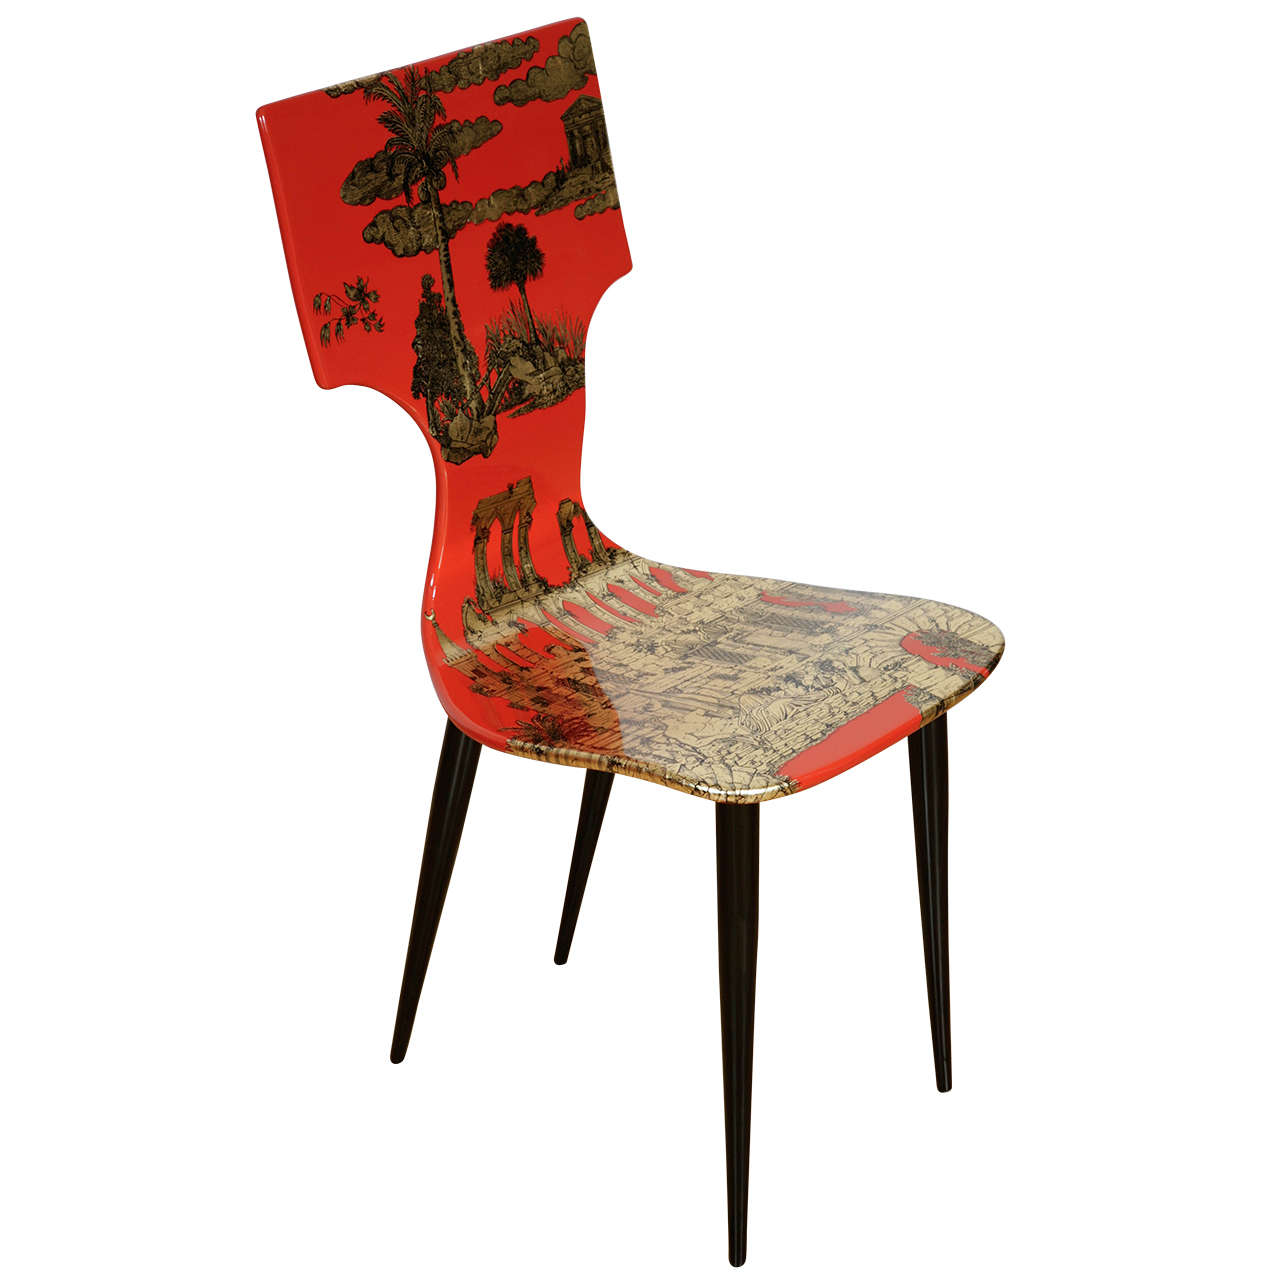 'Coromandel' Chair by Fornasetti